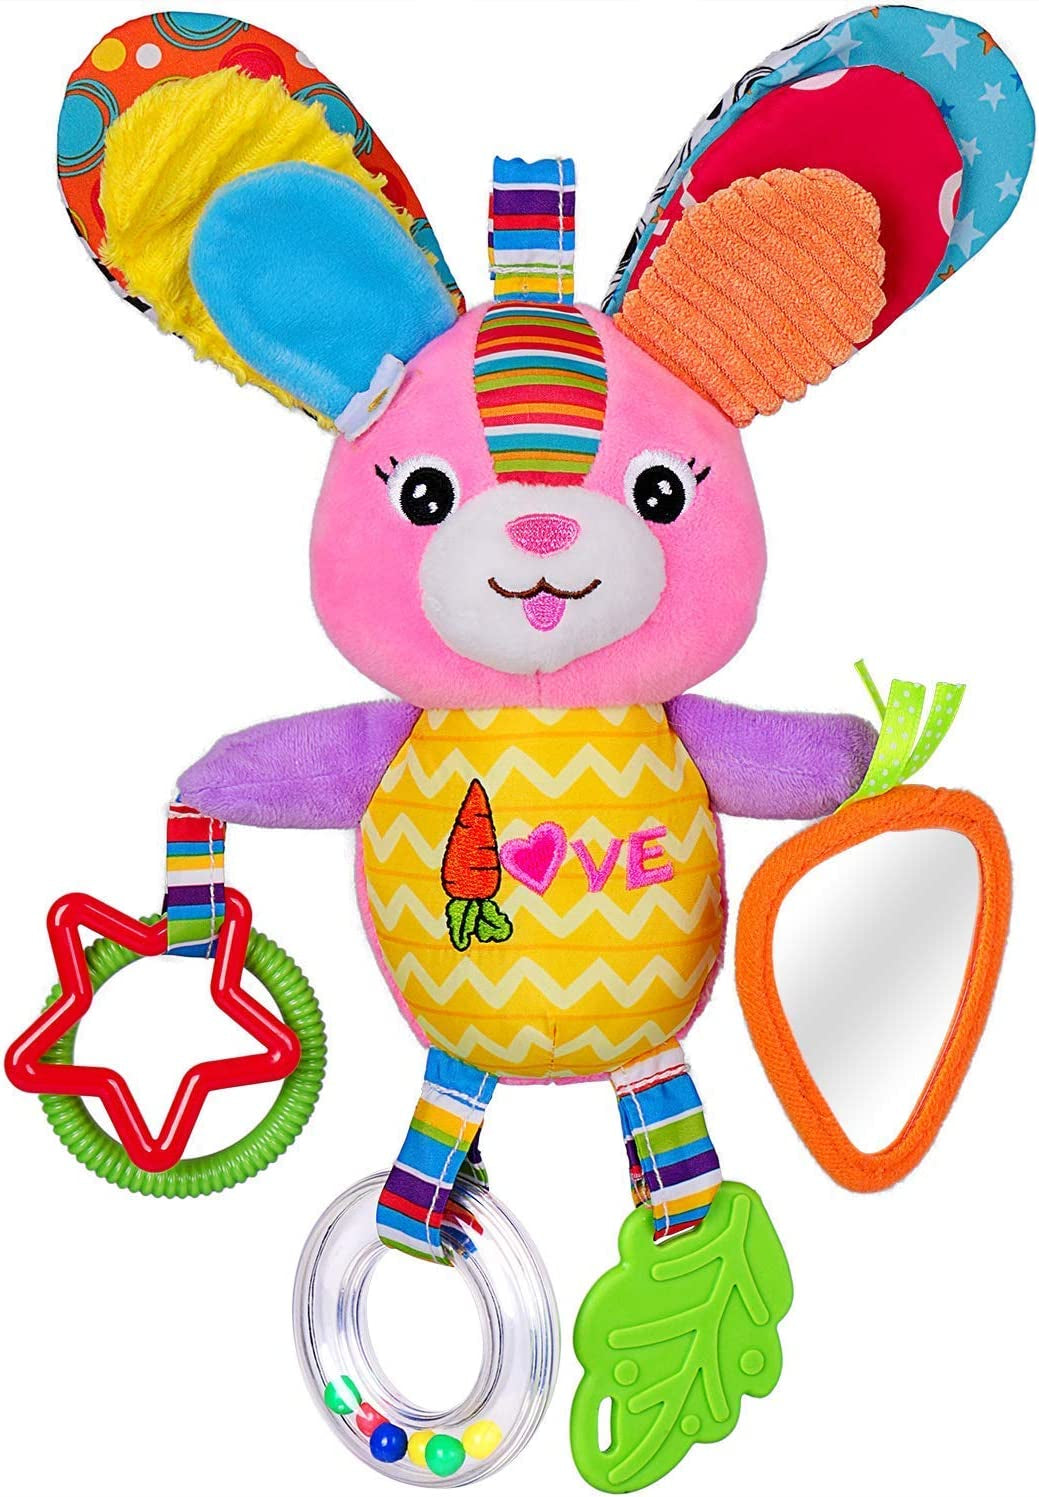 Dreamsdox Cute Animal Soft Baby Rattles Teether Toys, Baby Crib Cot Pram Hanging Rattles Stroller Car Seat Toy (Rabbit)